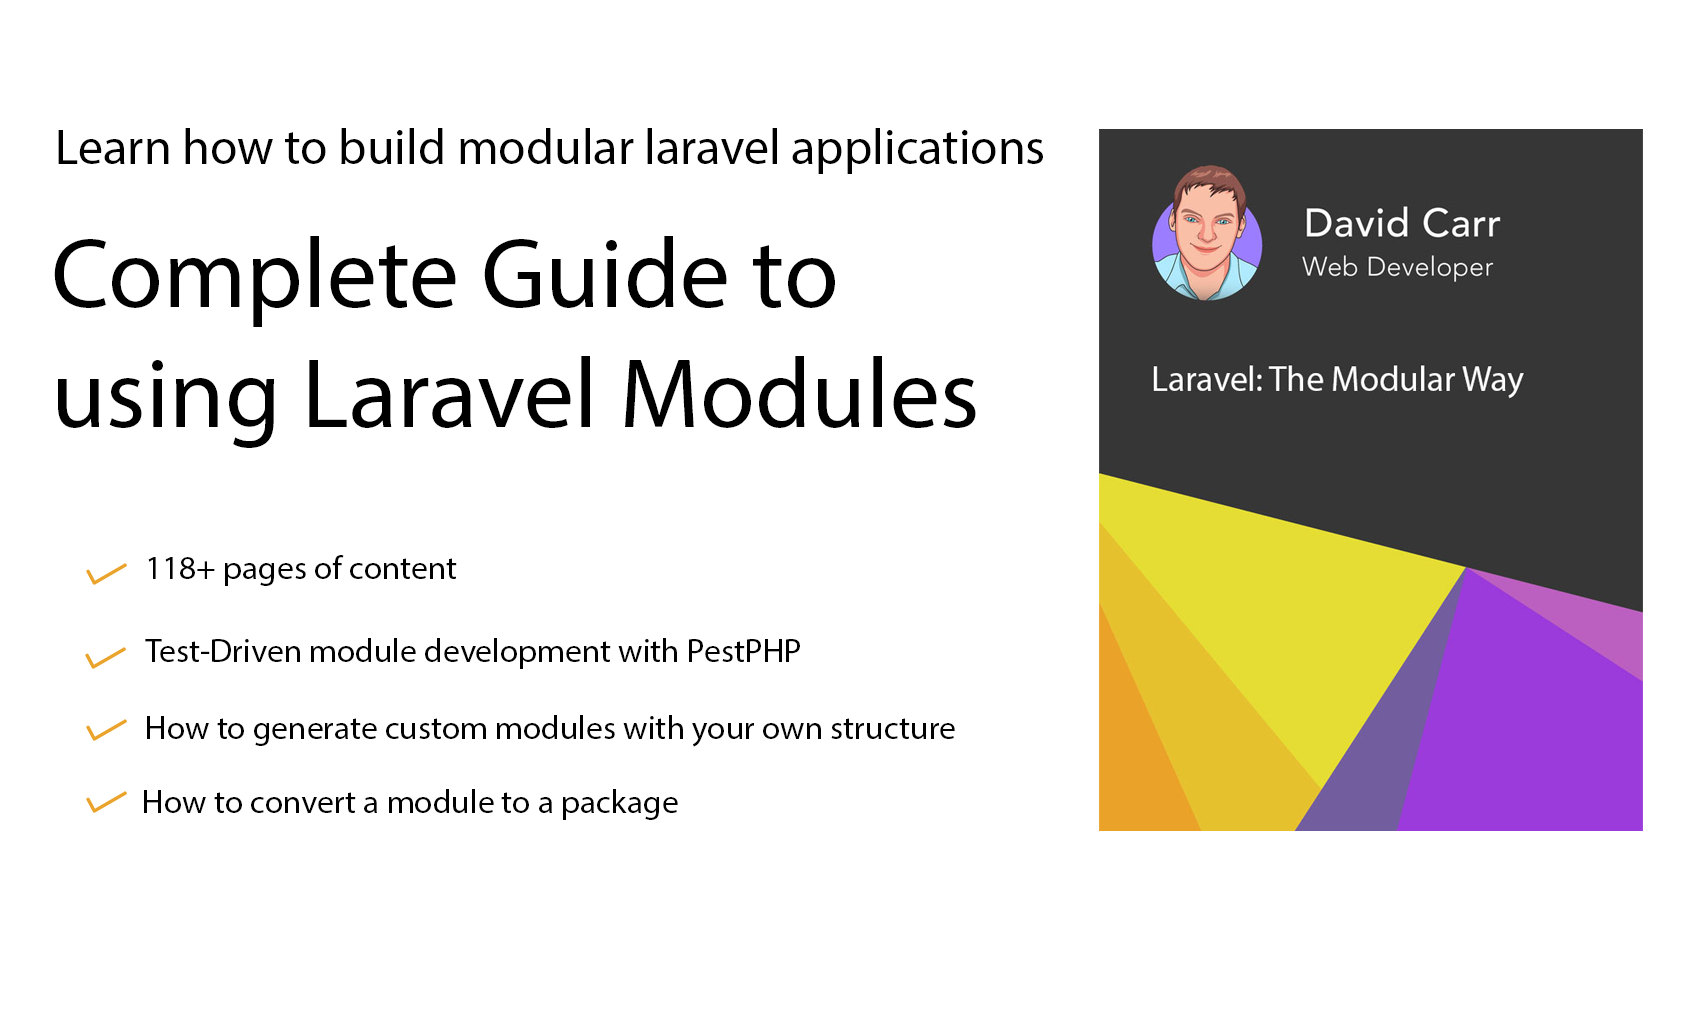 Laravel: The Modular Way by David Carr